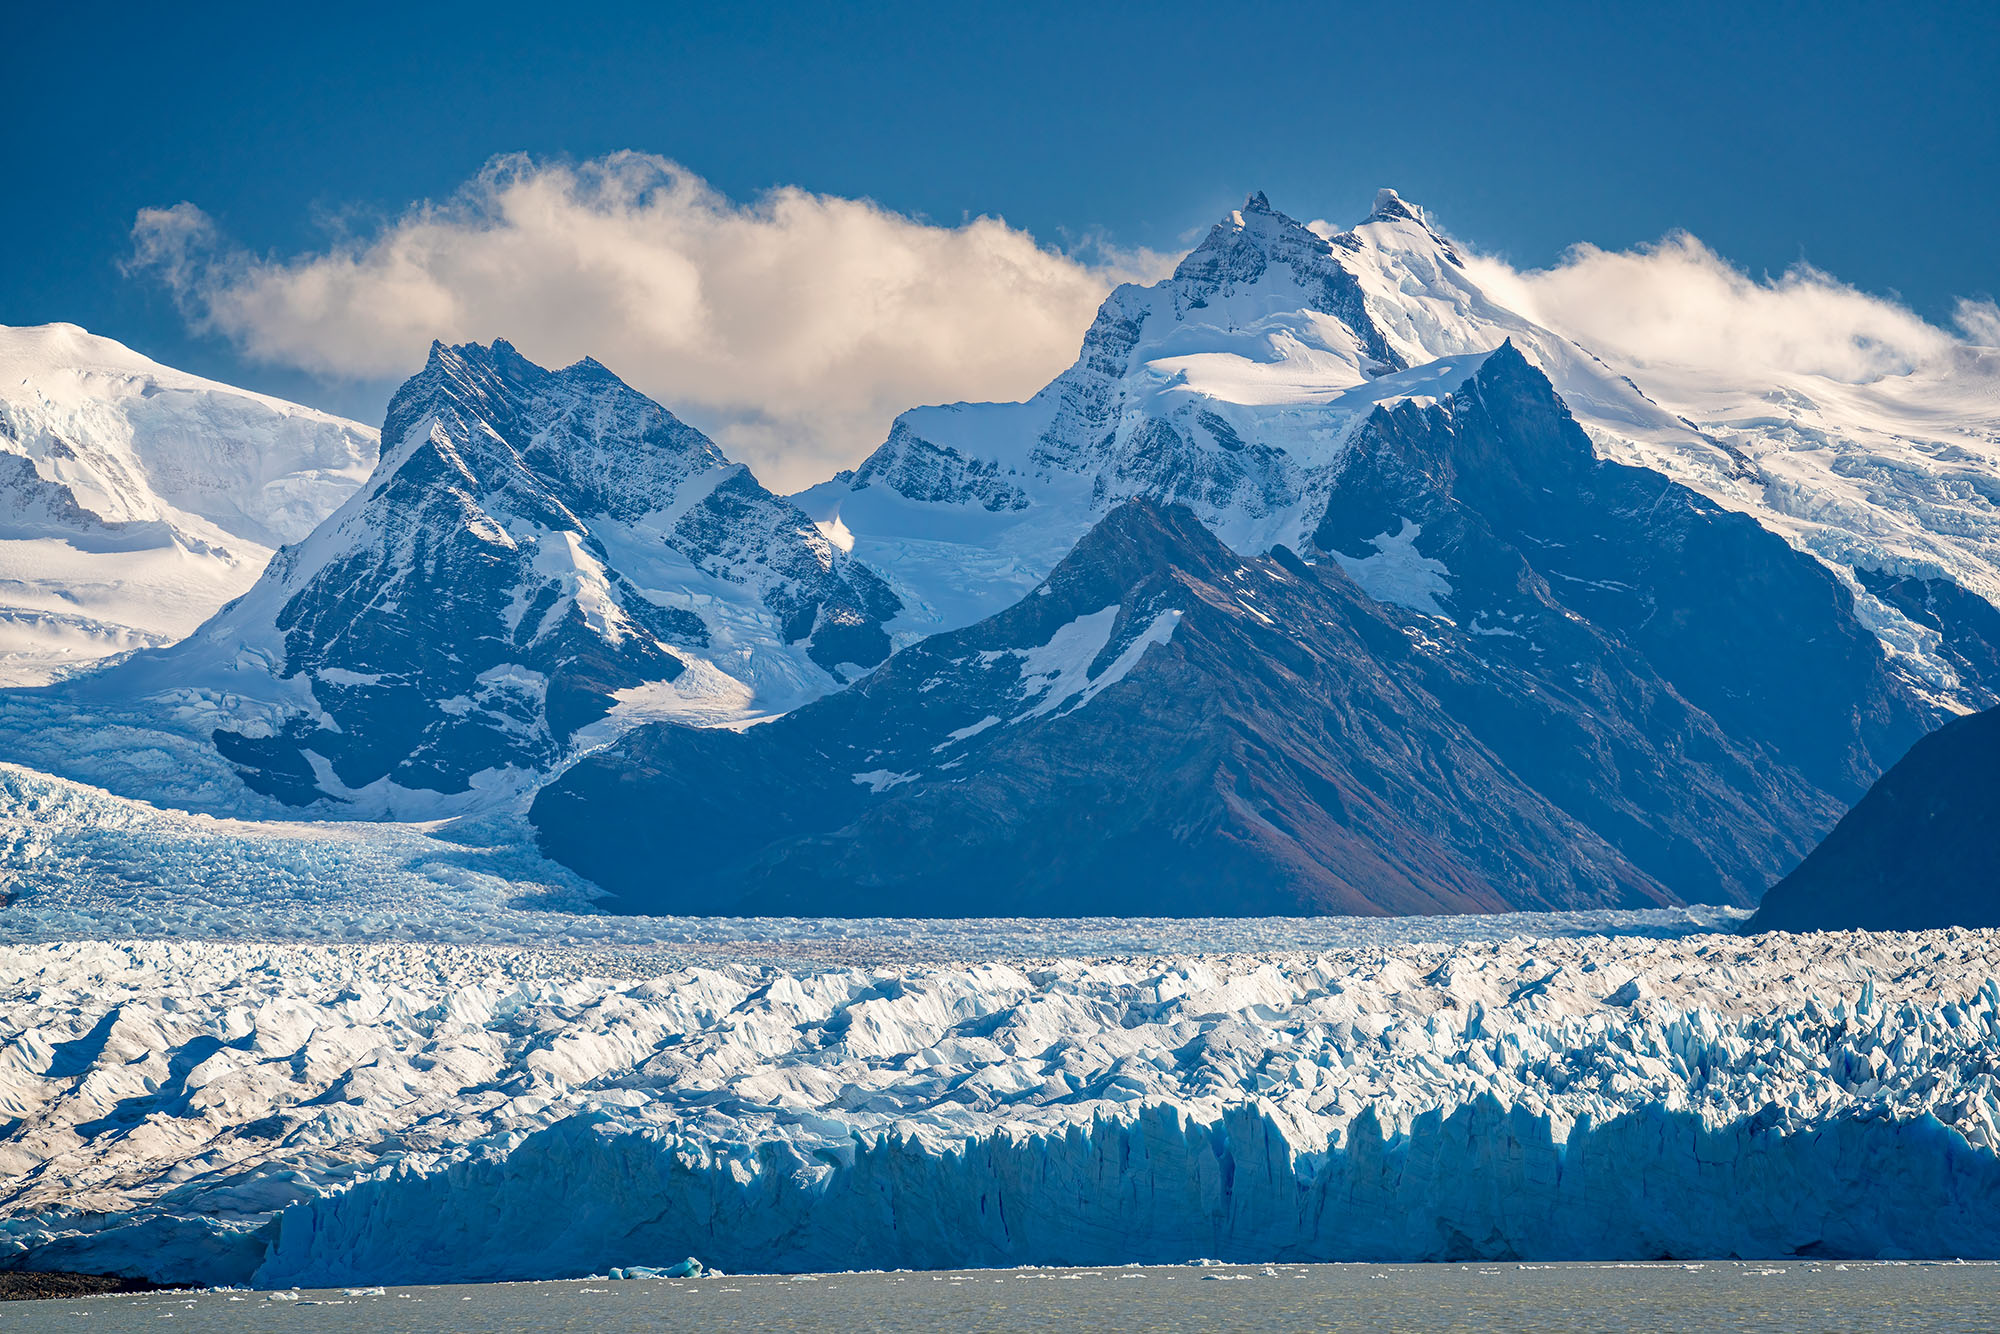 In this striking image, we gaze upon the grandeur of the Moreno Glacier in Patagonia, Argentina. The glacier sprawls before us...